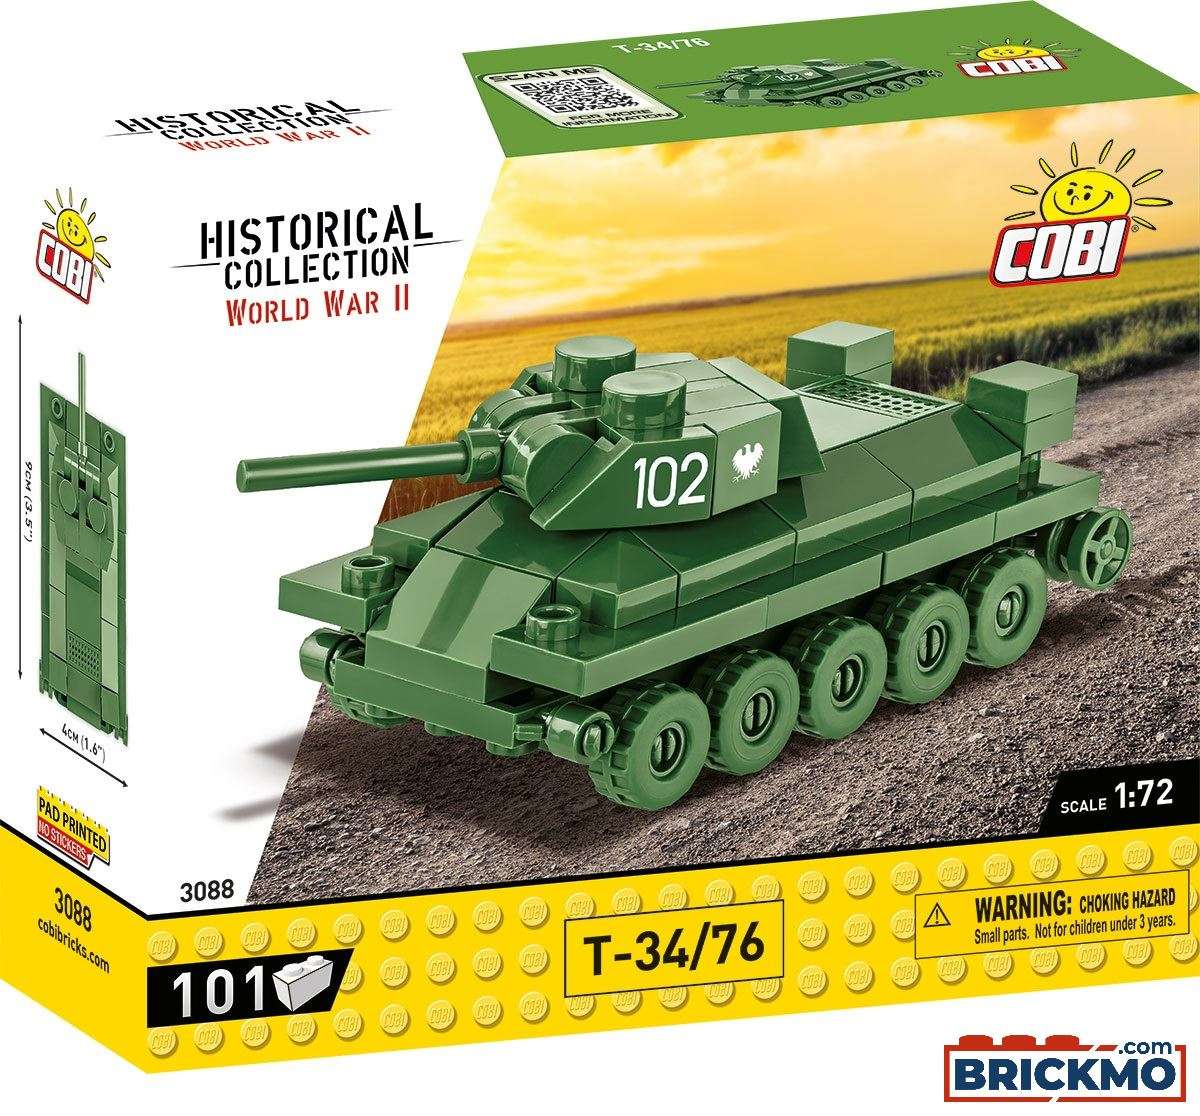 Cobi Historical Collection World War II 3088 T-34 76 3088